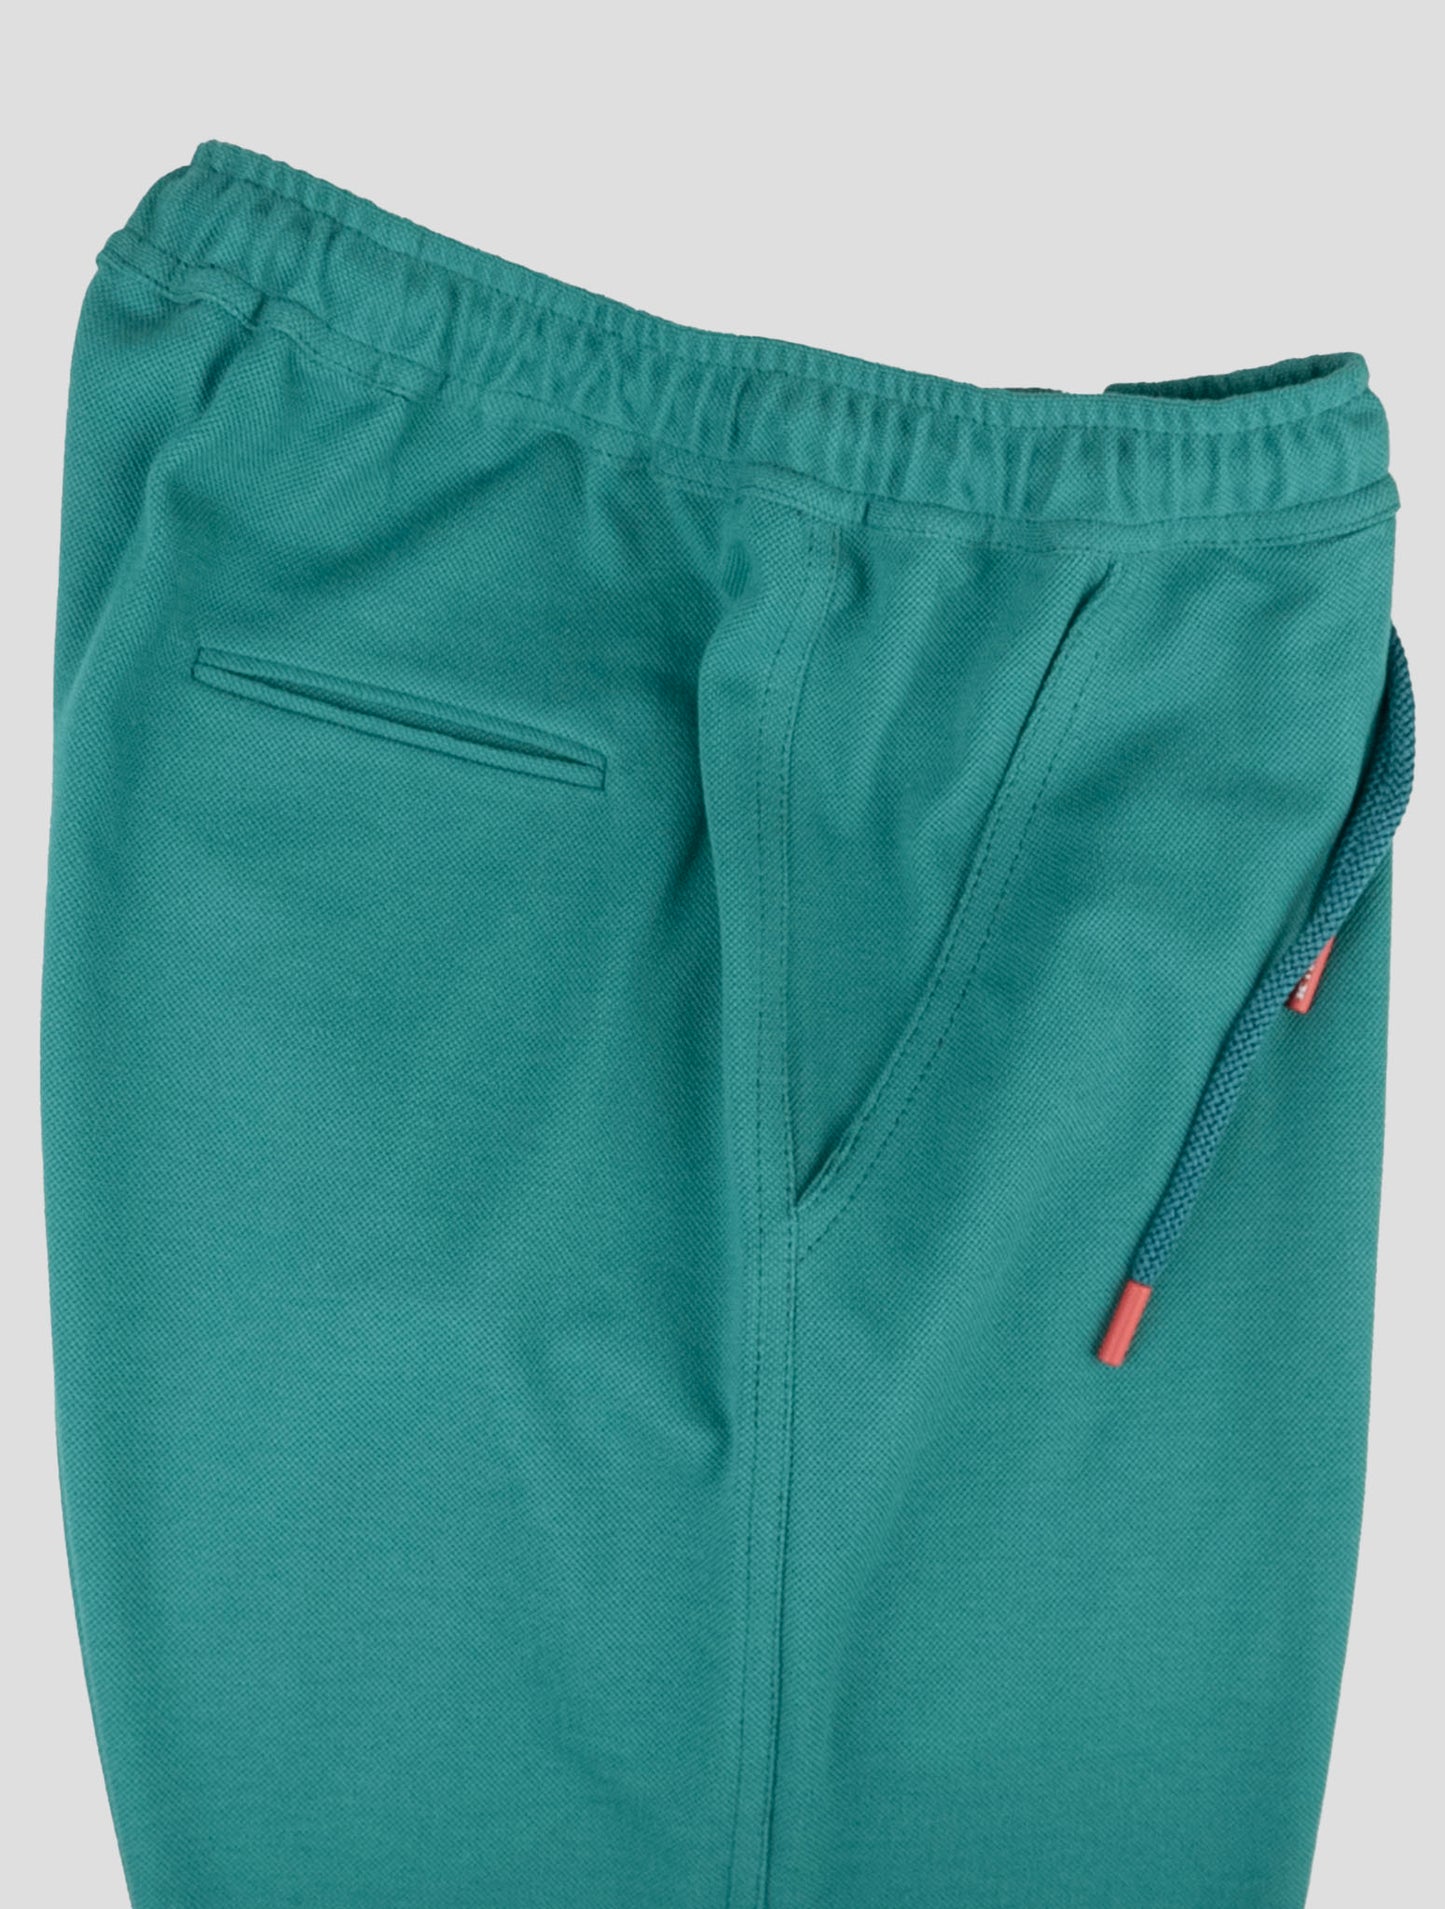 Kiton Matching Outfit-Blaue Mariano und grüne kurze Hosen Trainings anzug